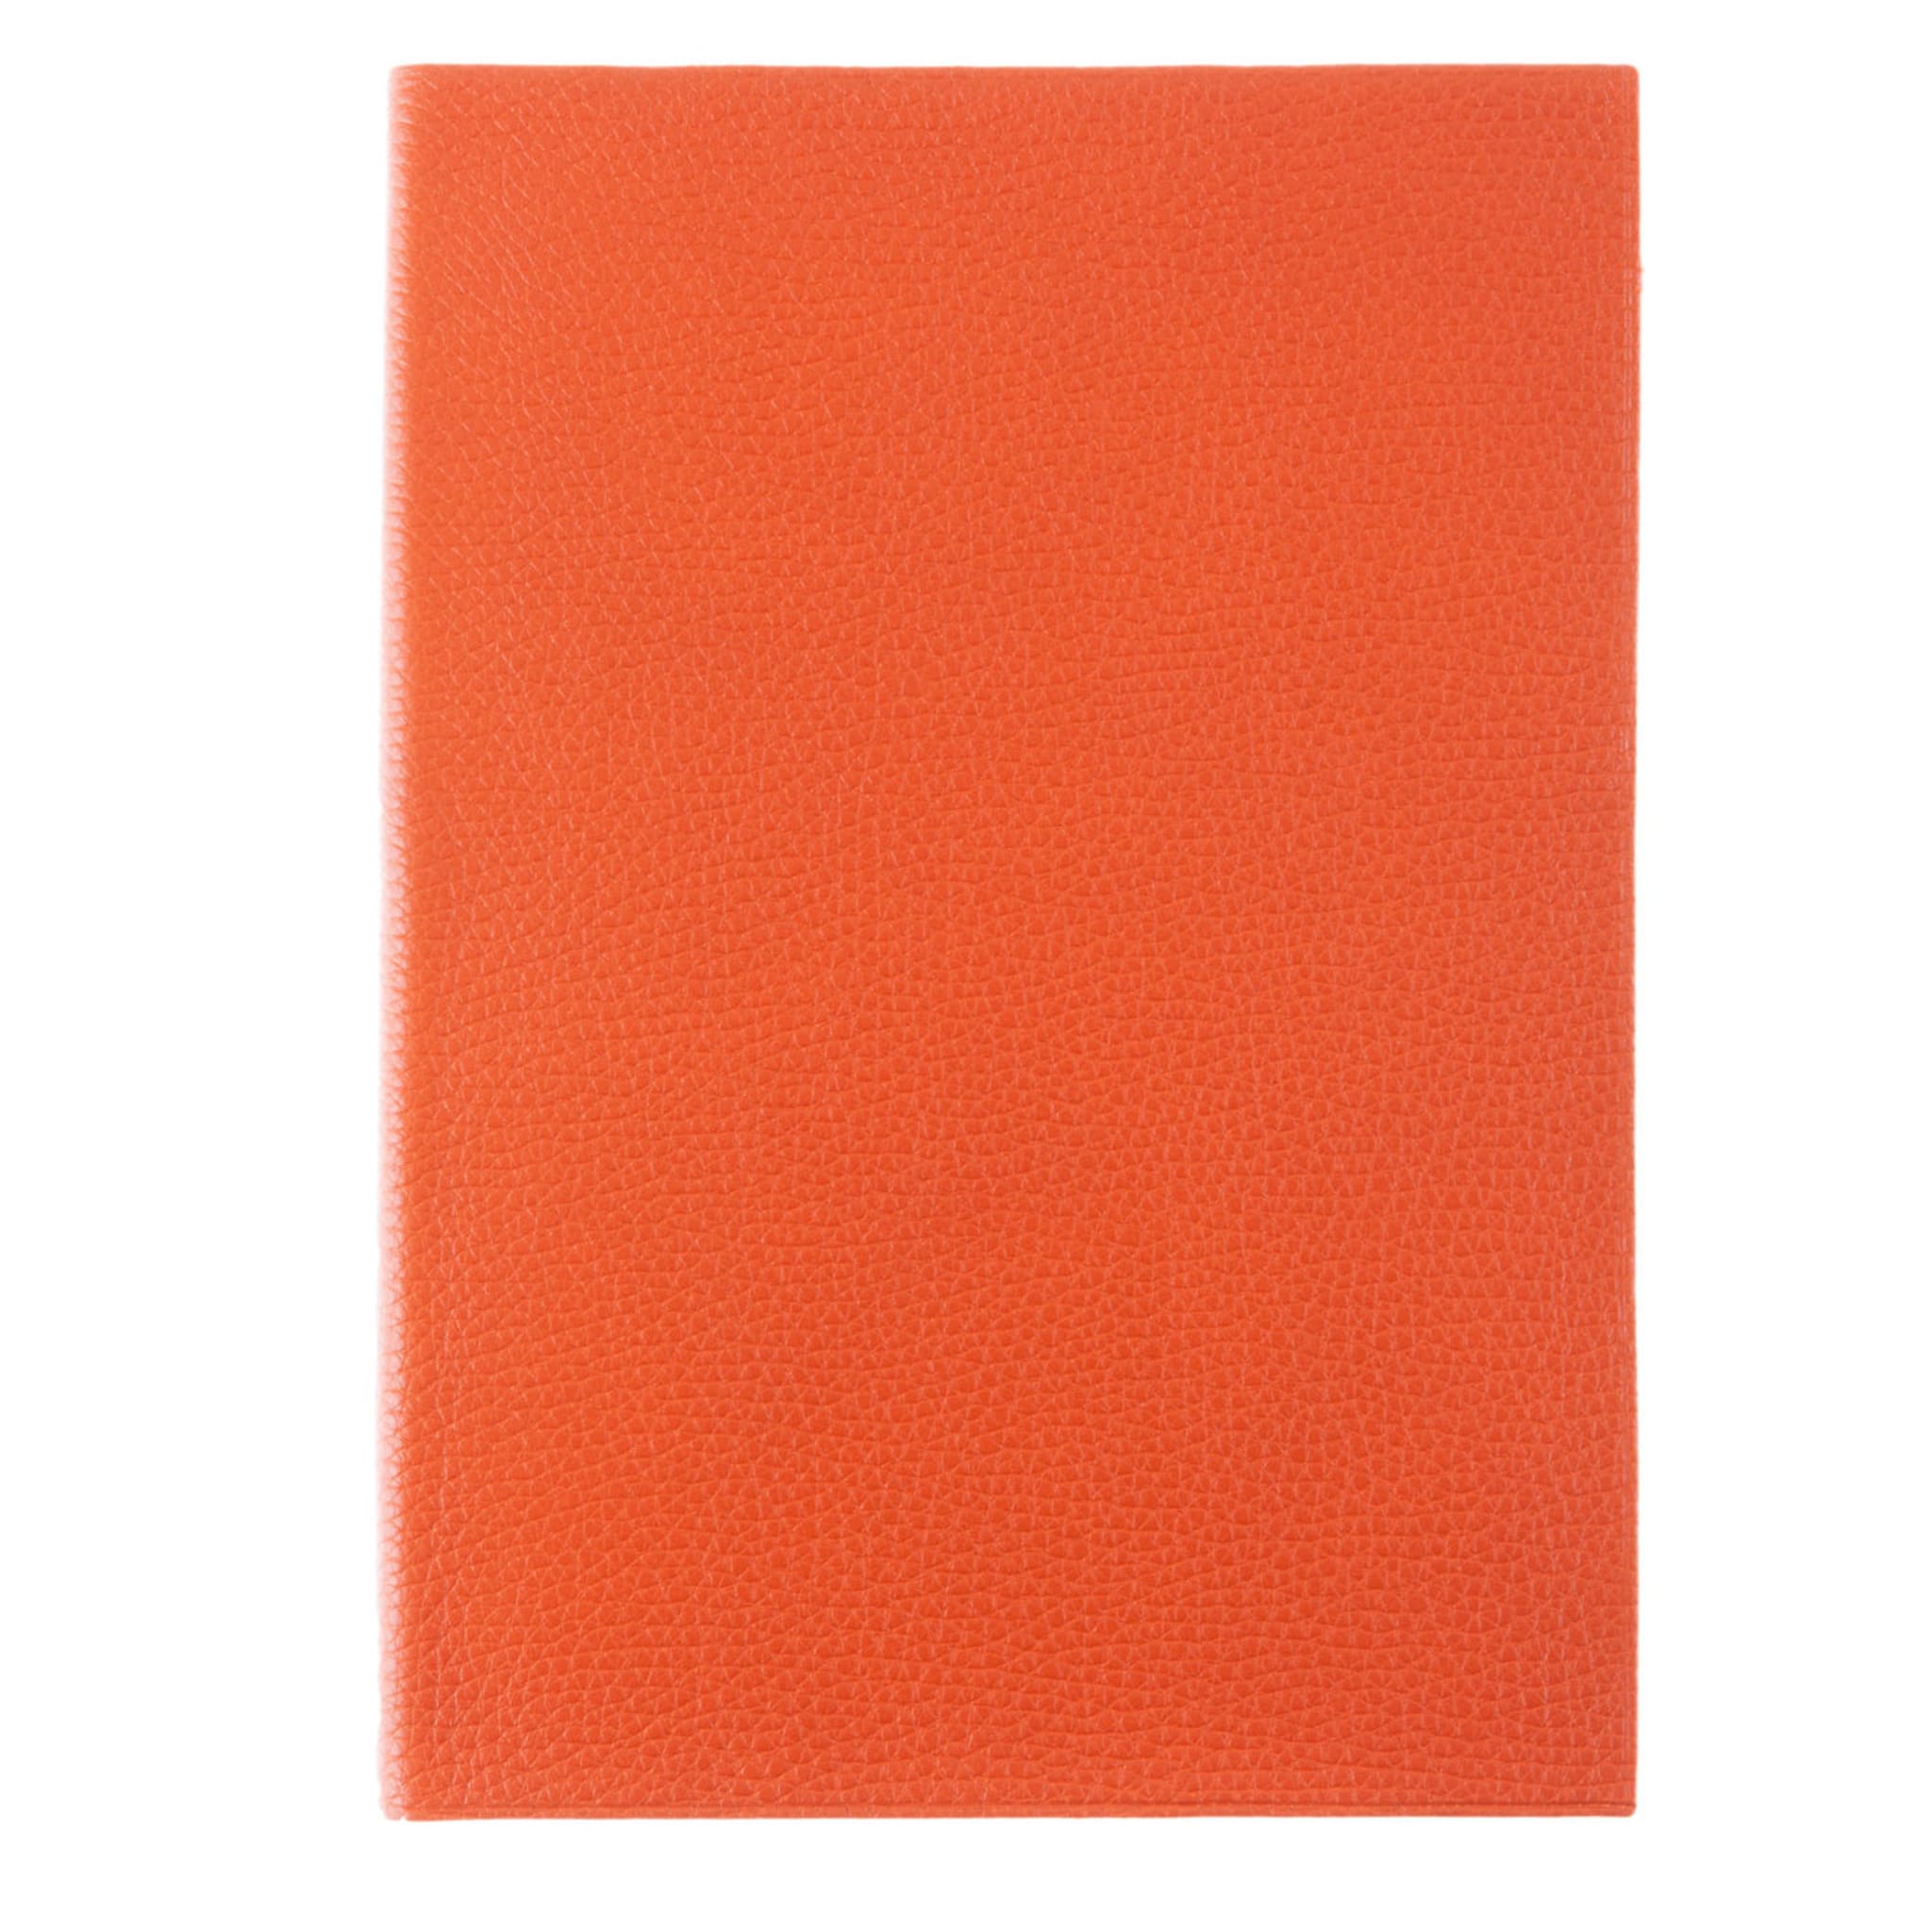 Orange Leather Notebook - Alternative view 1